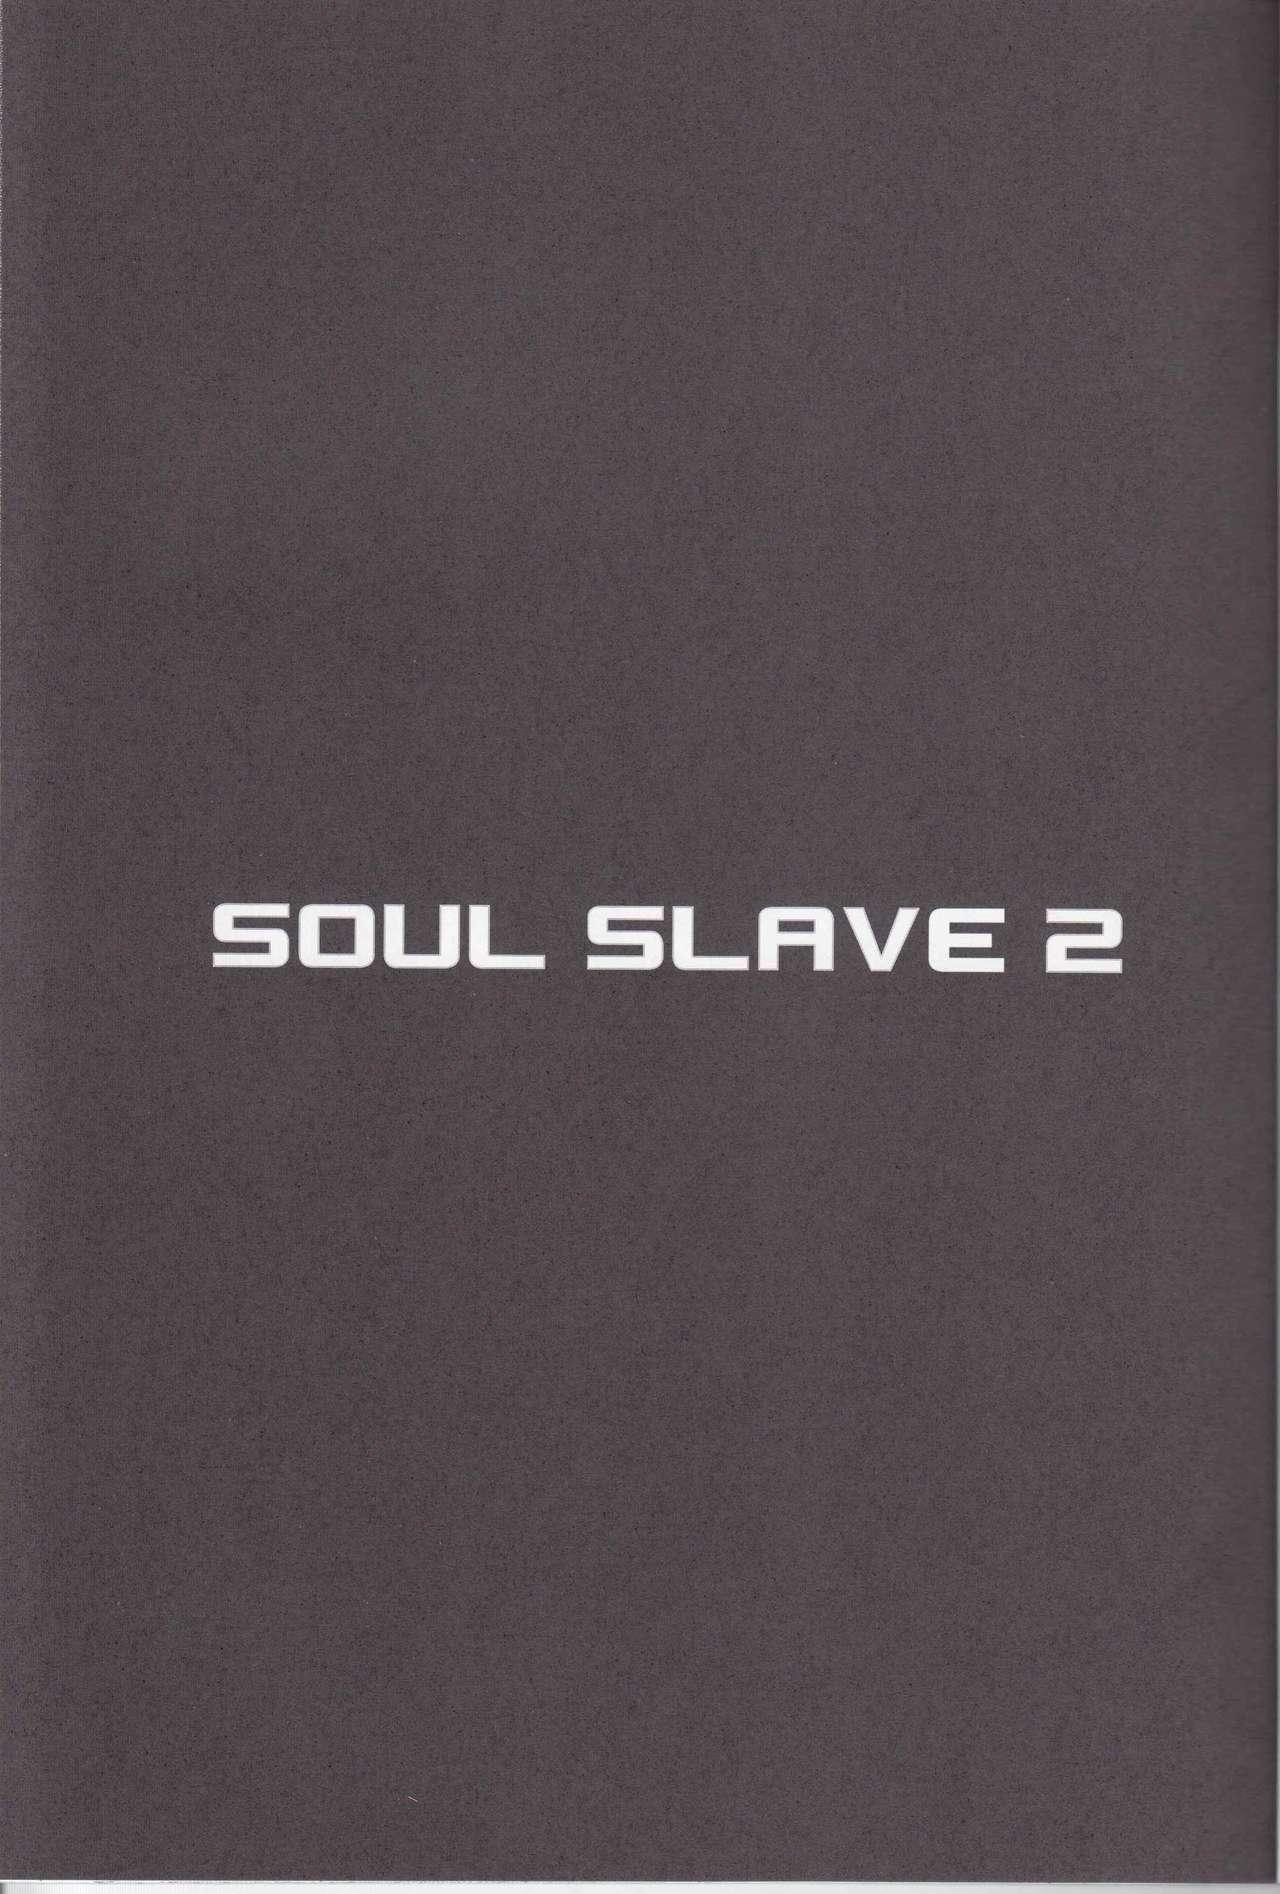 soul slave 2(C76) [Chill-Out (深水直行)]  (ソウルキャリバー) [中国翻訳](46页)